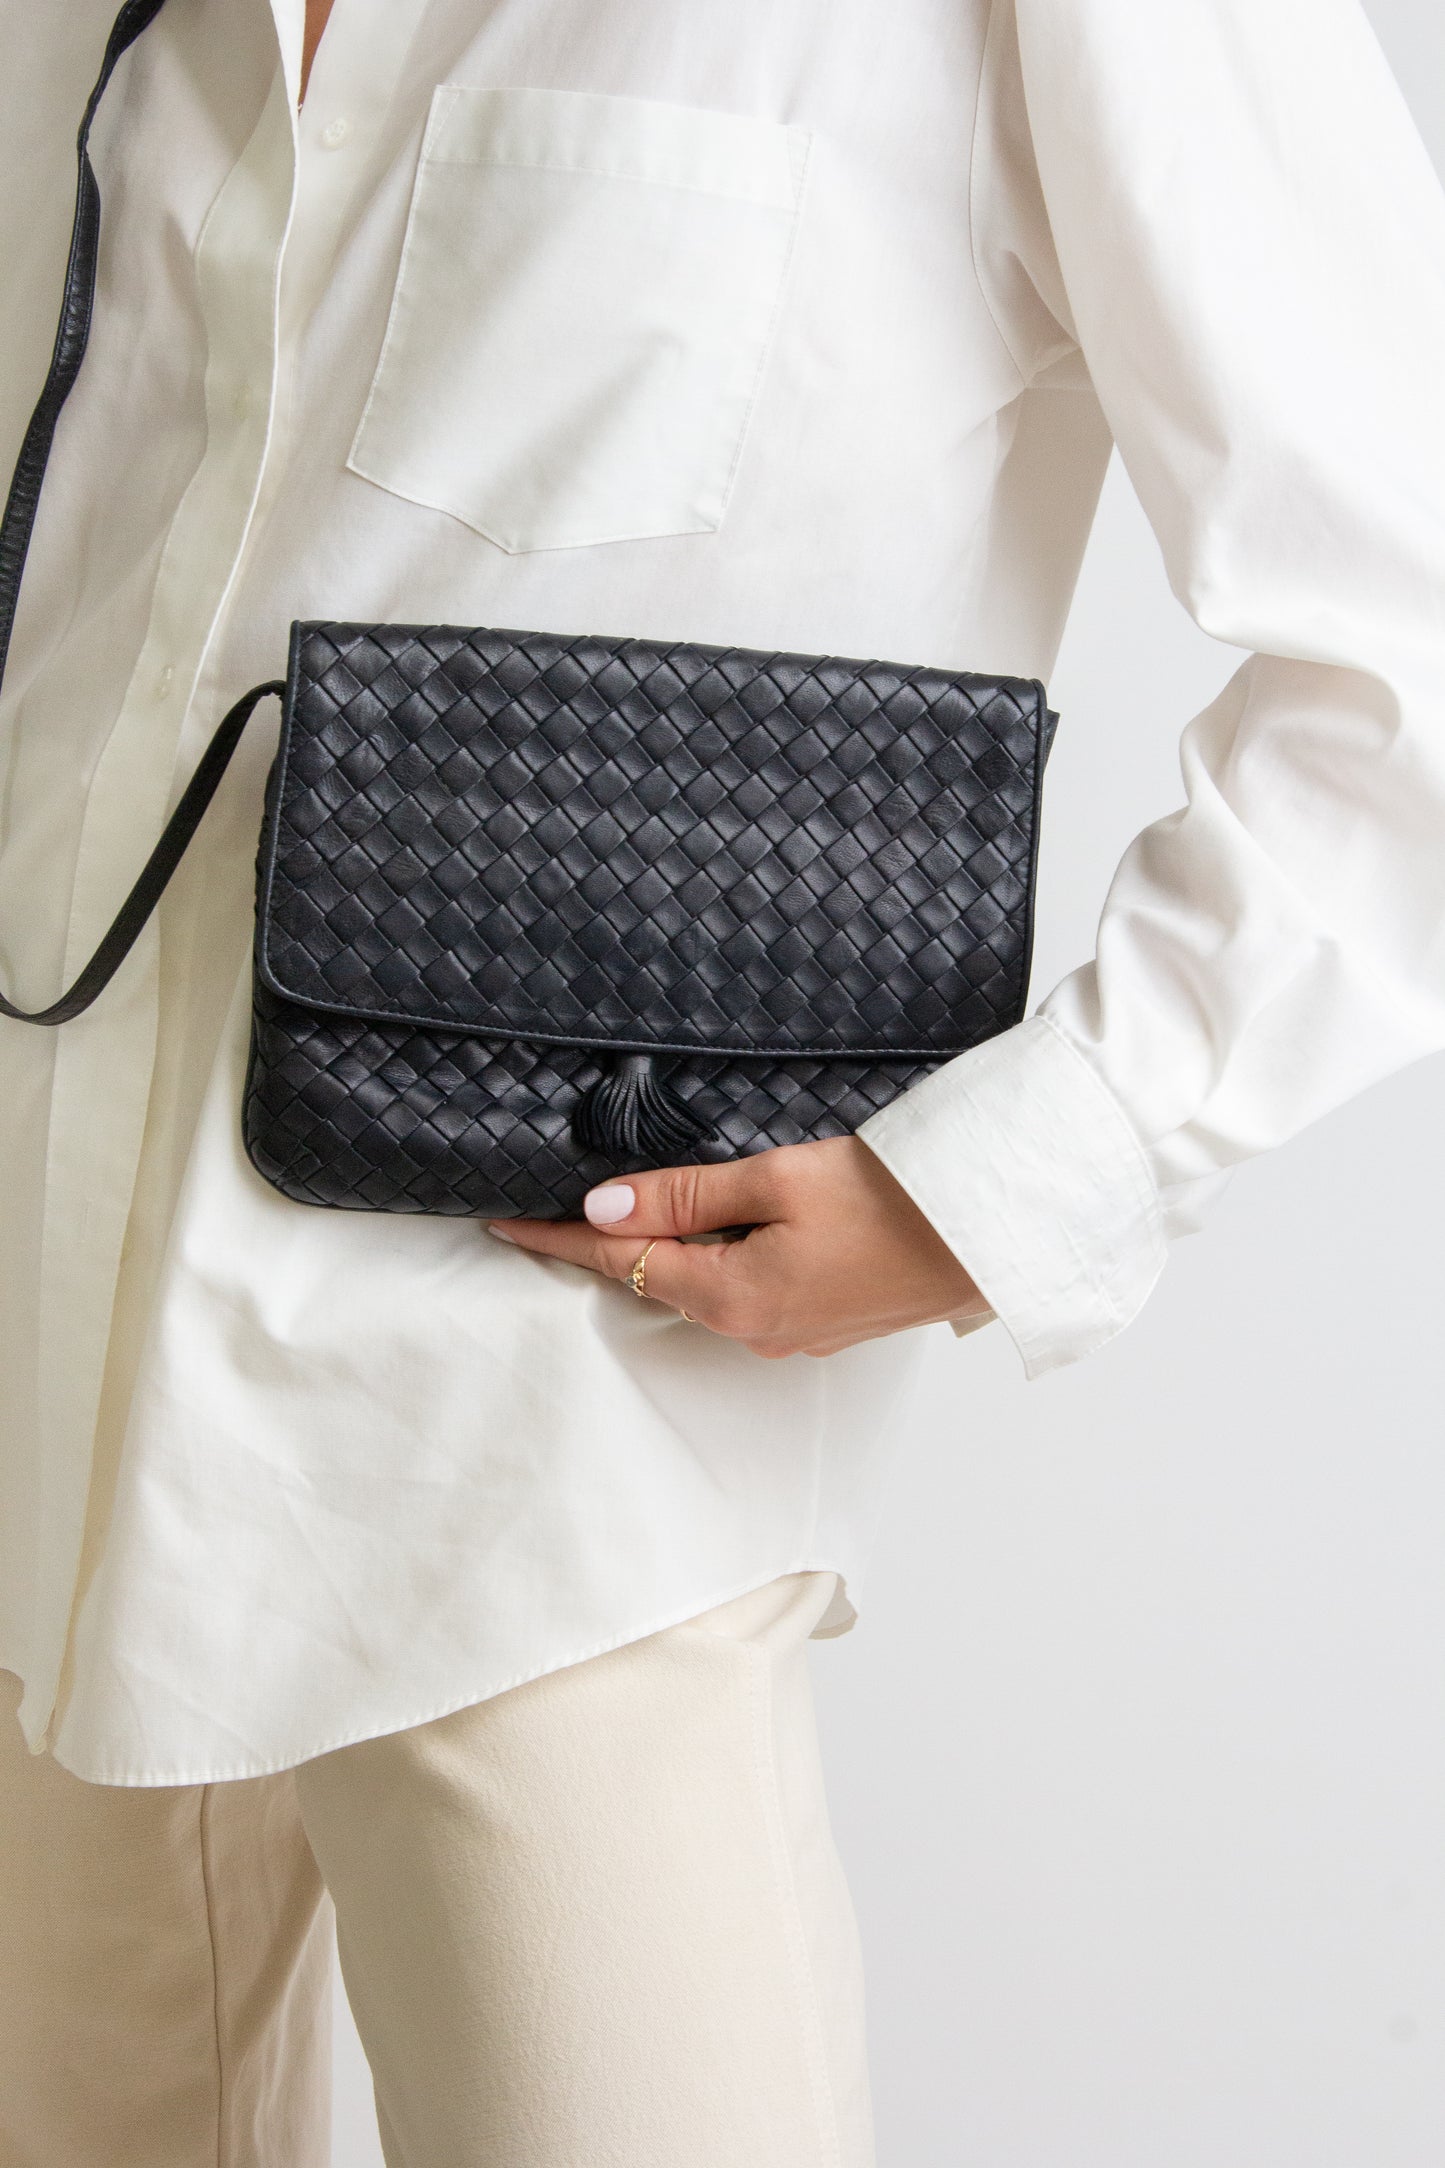 Bottega Veneta Intrecciato Leather Double Flap Bag Black